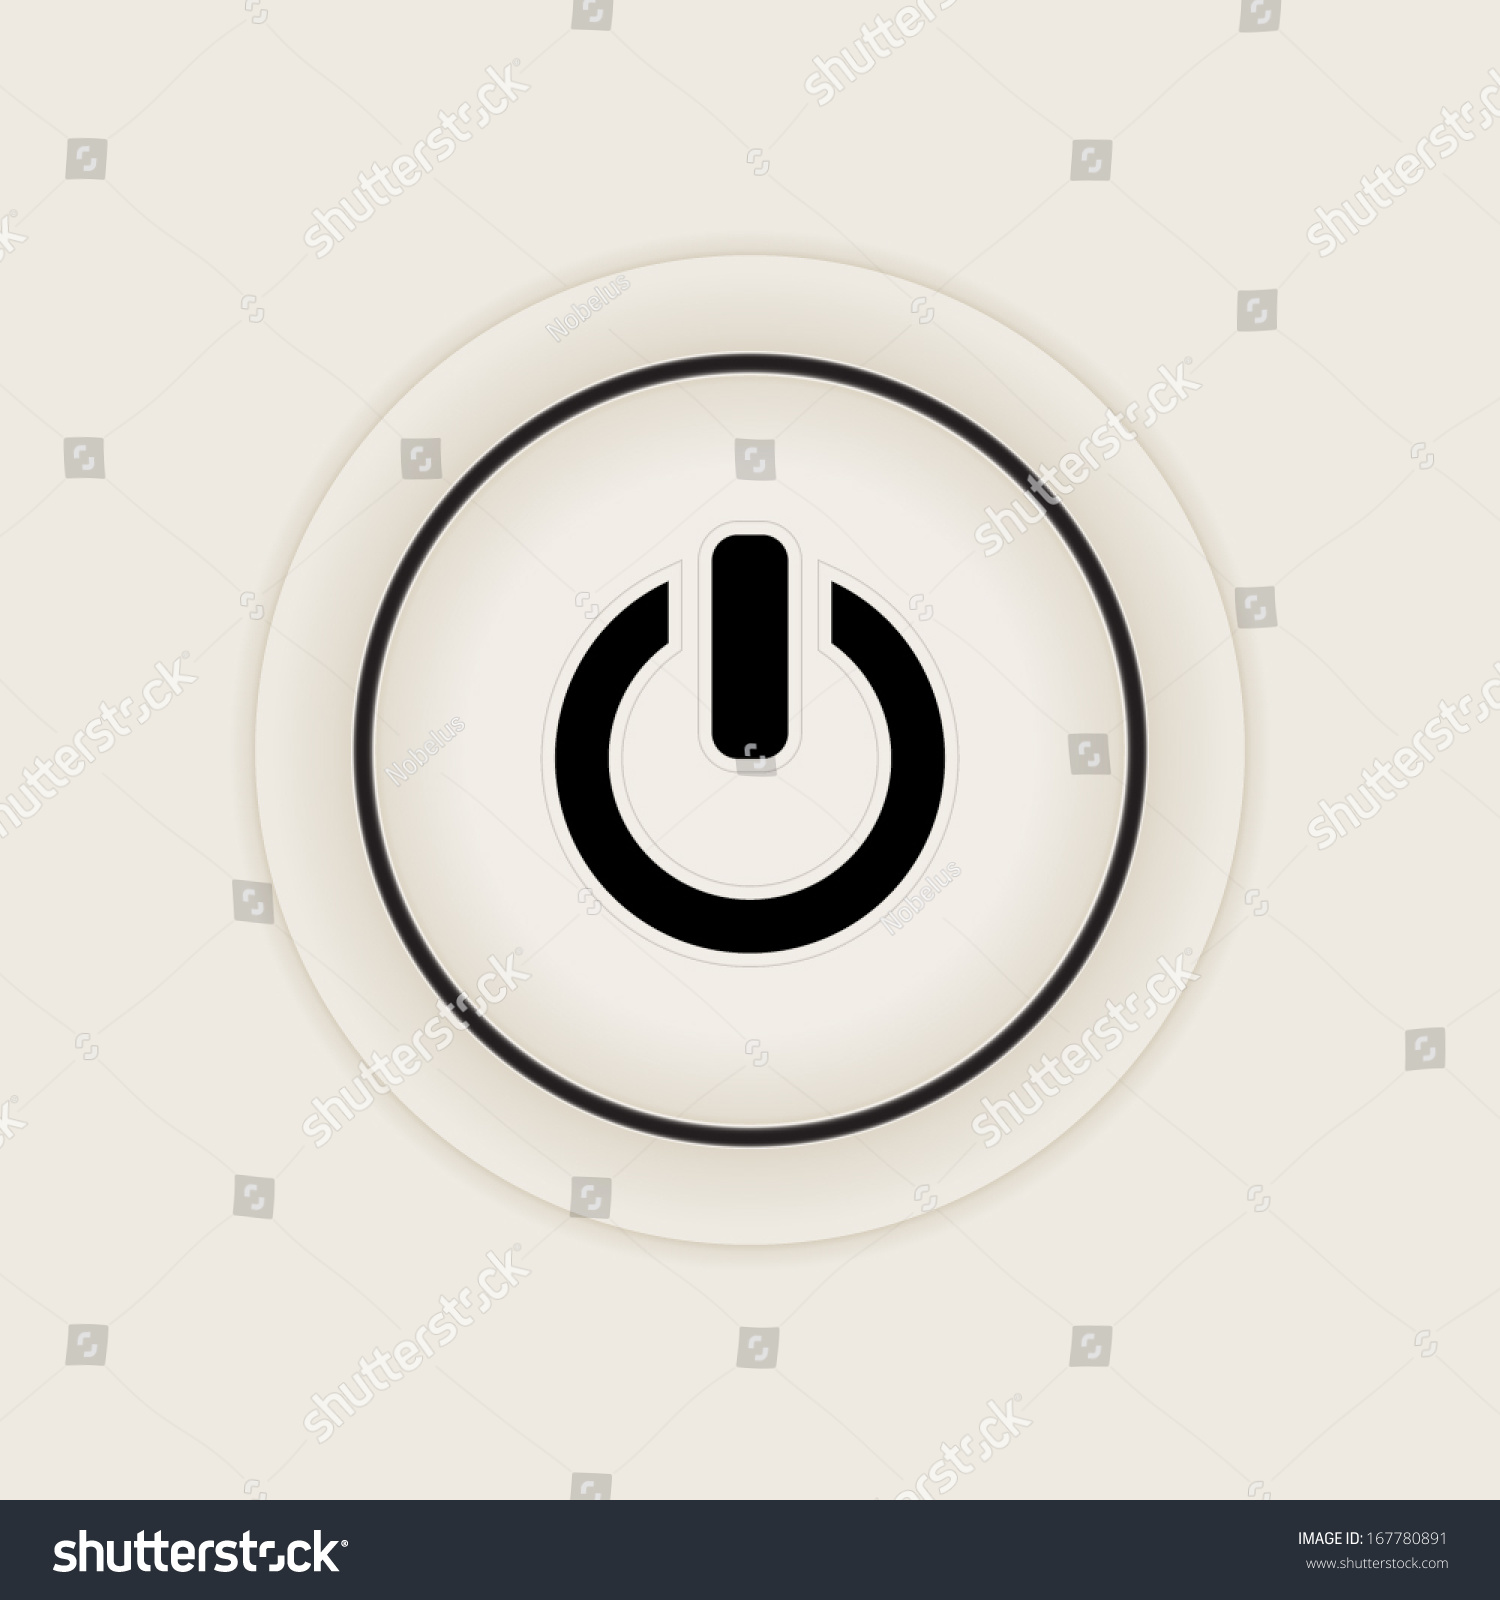 Start | power button | icon #167780891